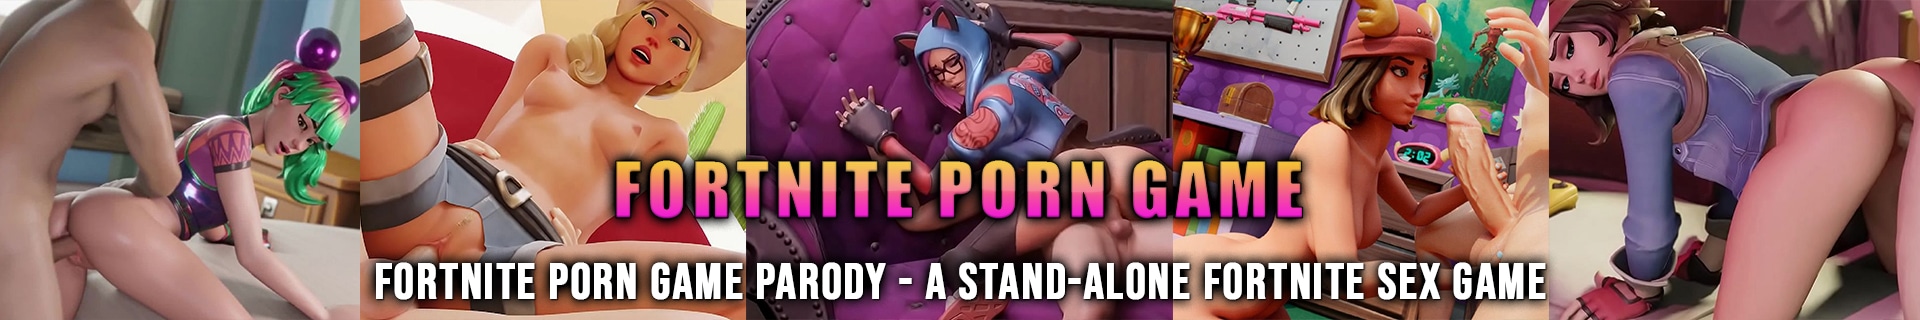 Fortnite seks game porno